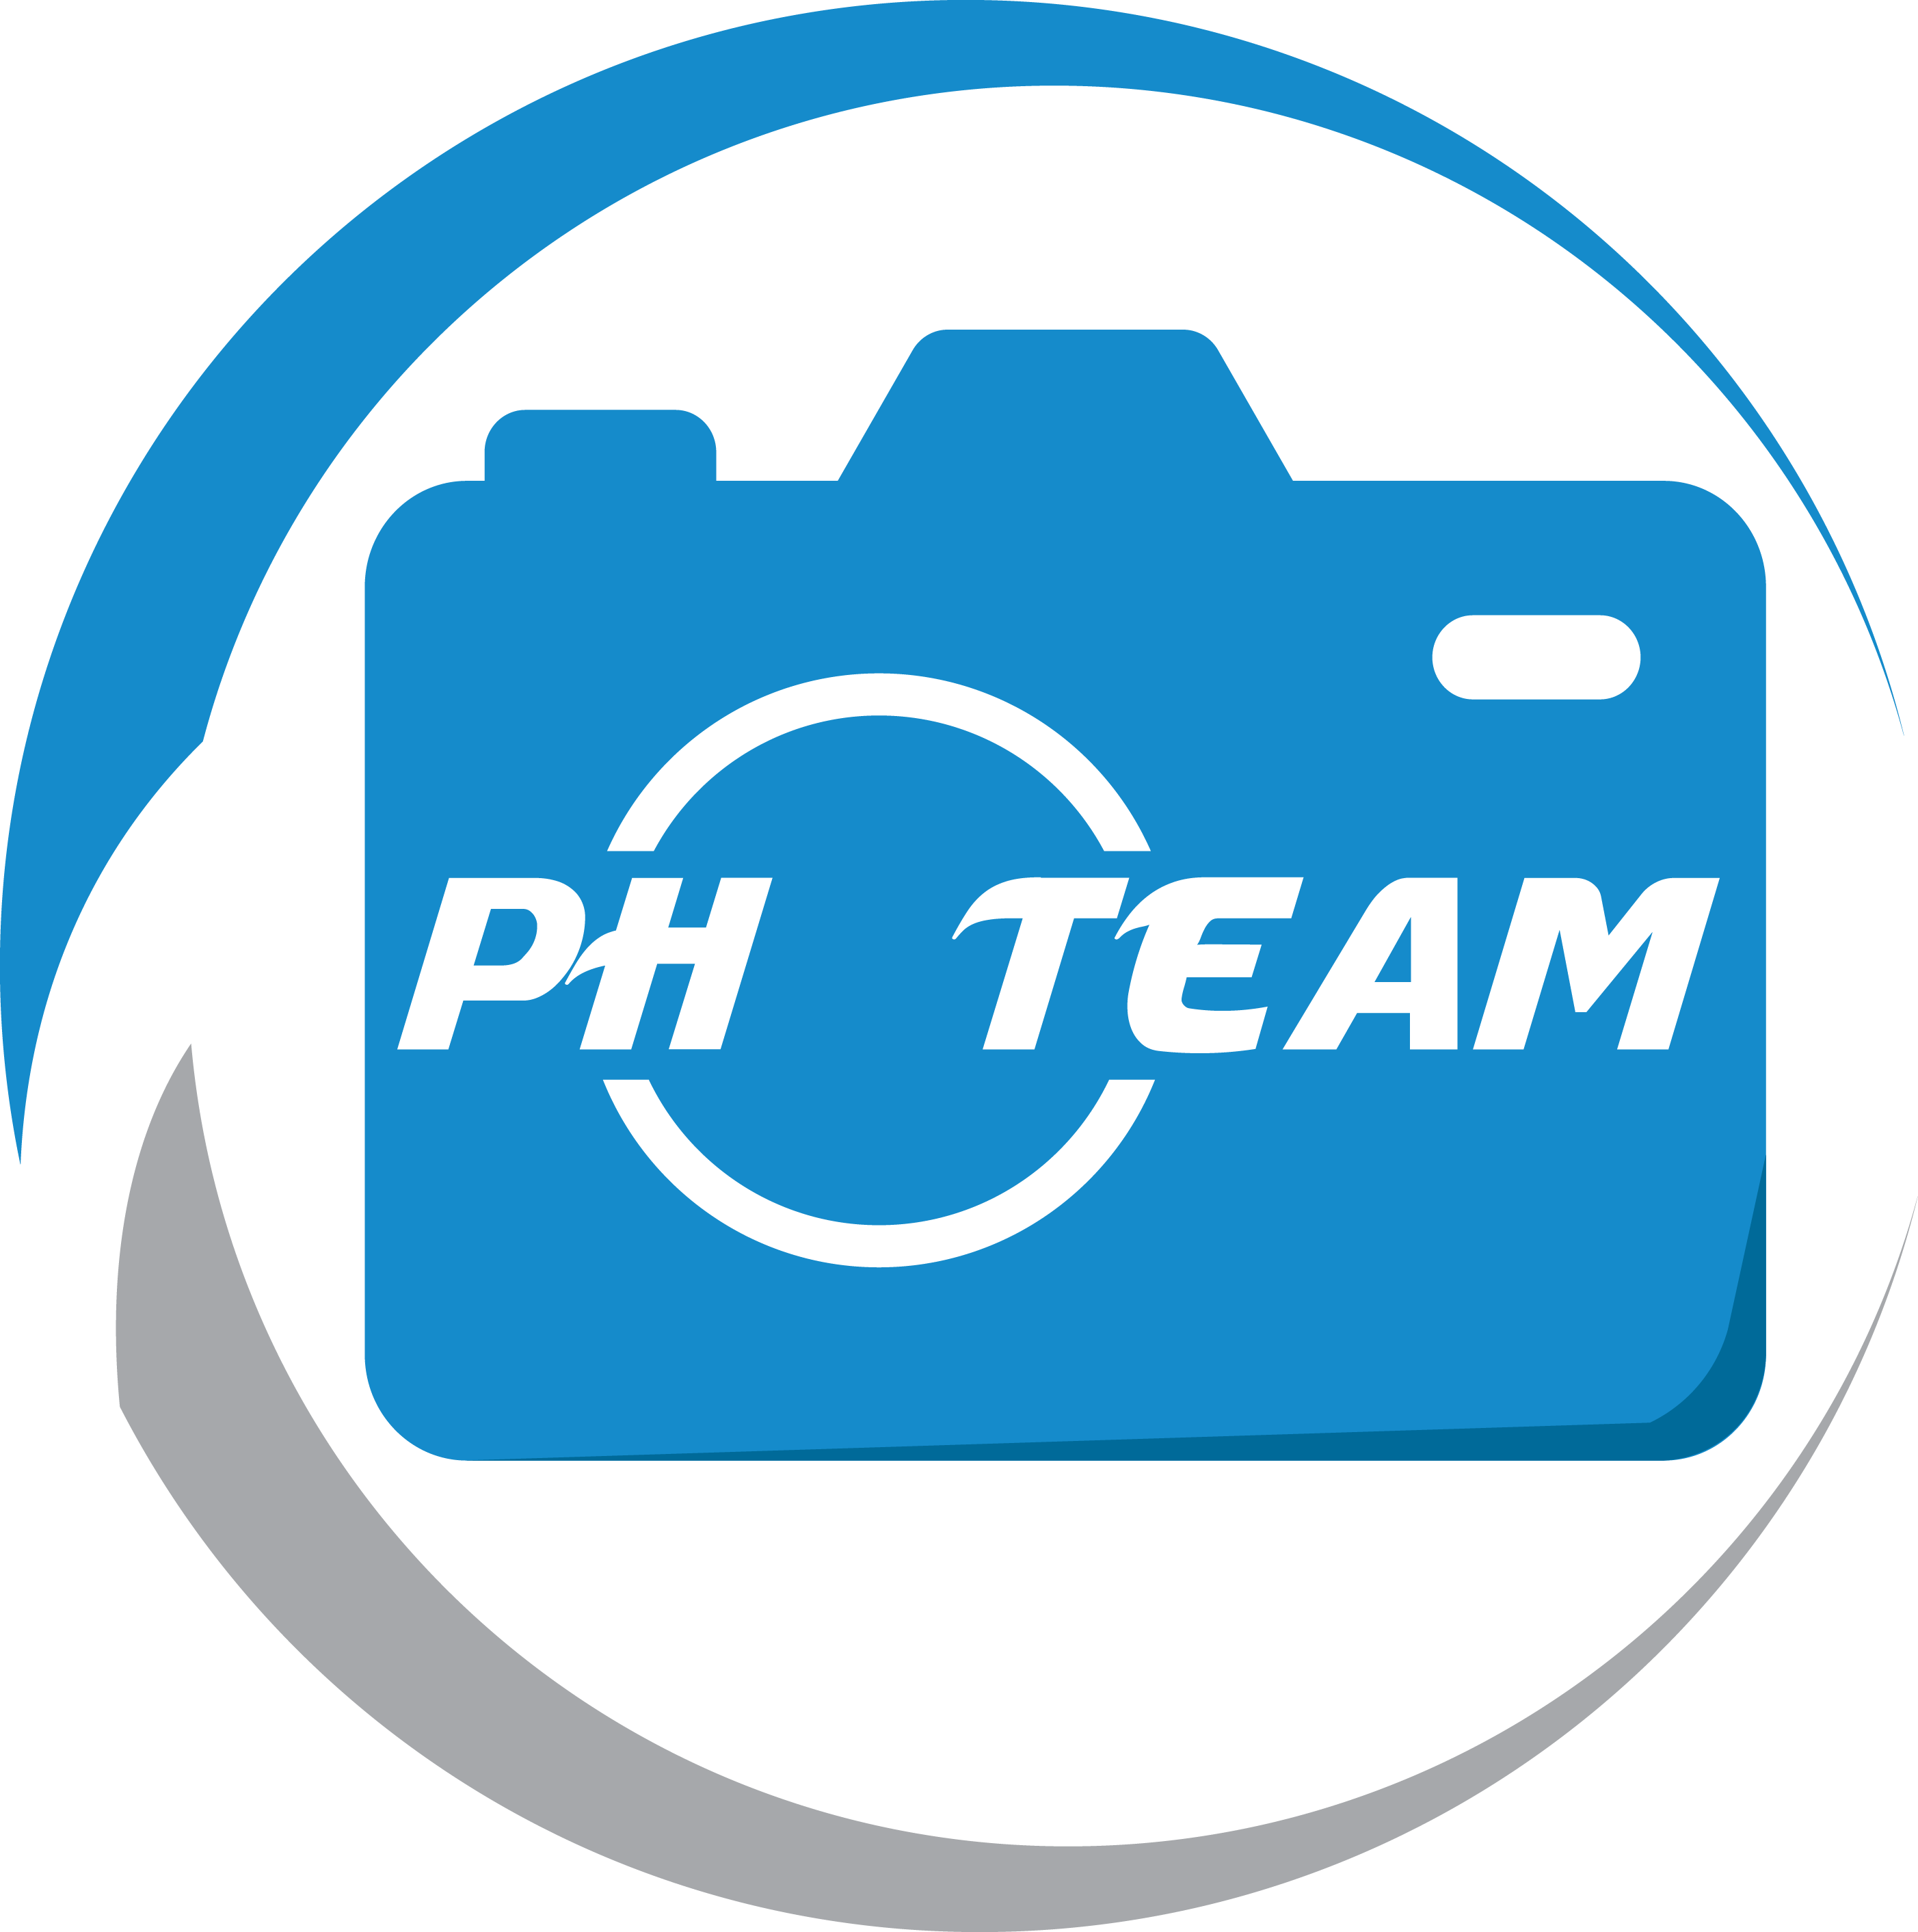 Photeam Logo